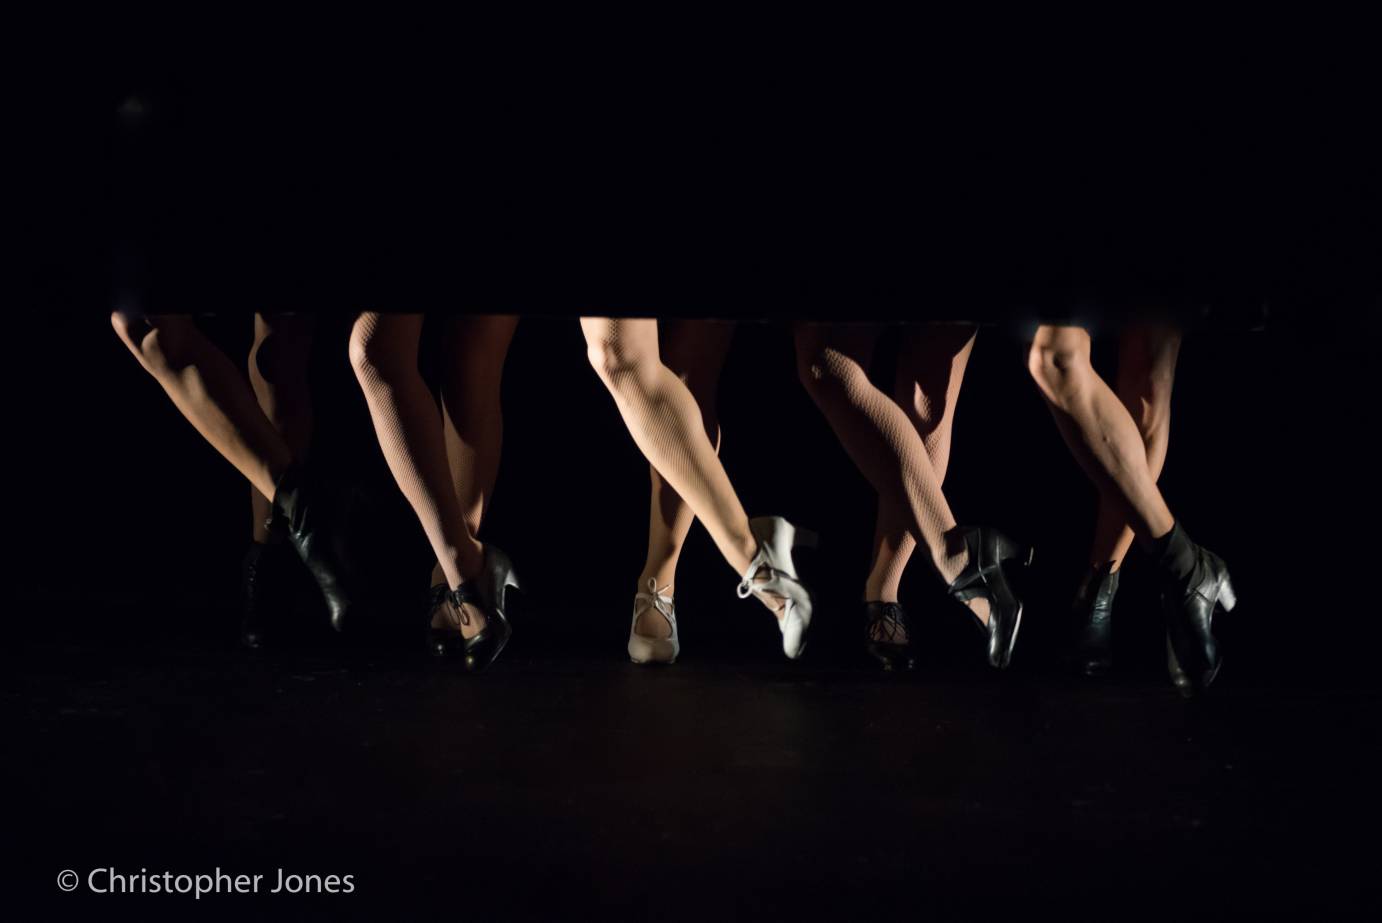 A curtain reveals only flamenco dancers' feet